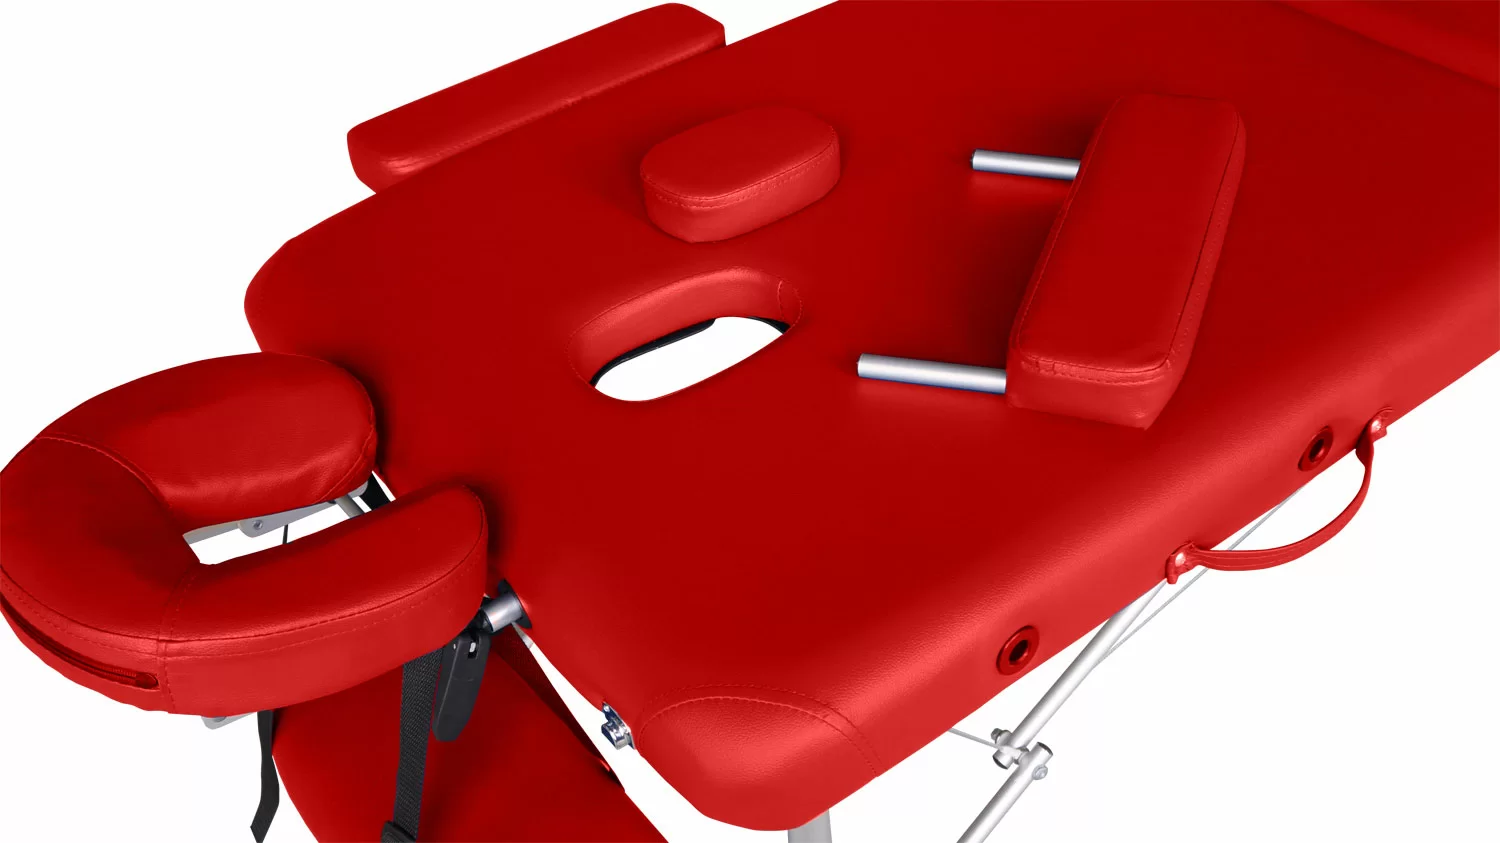 Фото Массажный стол DFC NIRVANA, Elegant OPTIMA,  186х60х4 см, алюм. ножки, цвет красный (red) со склада магазина СпортСЕ